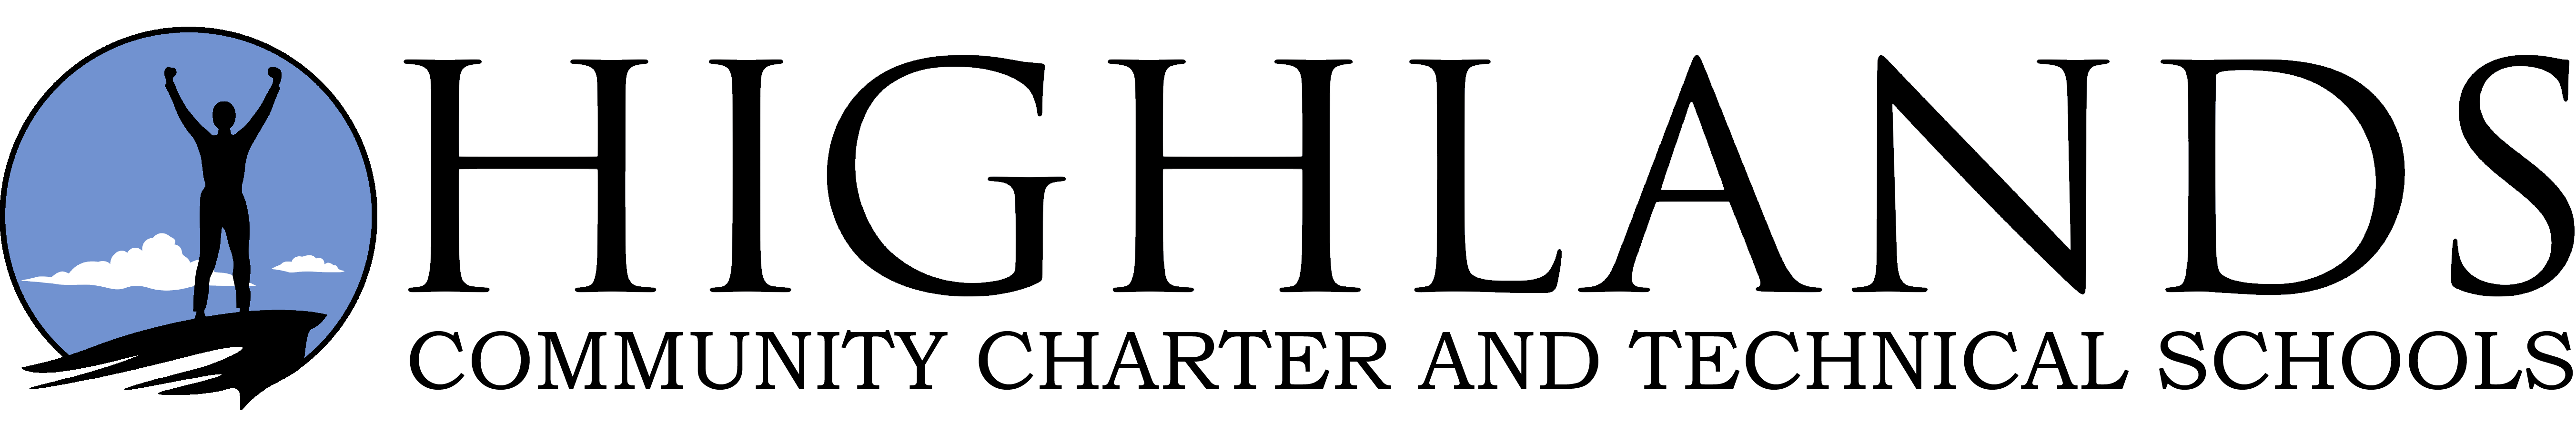 Highlands Community Charter School  -  Sacramento Logo